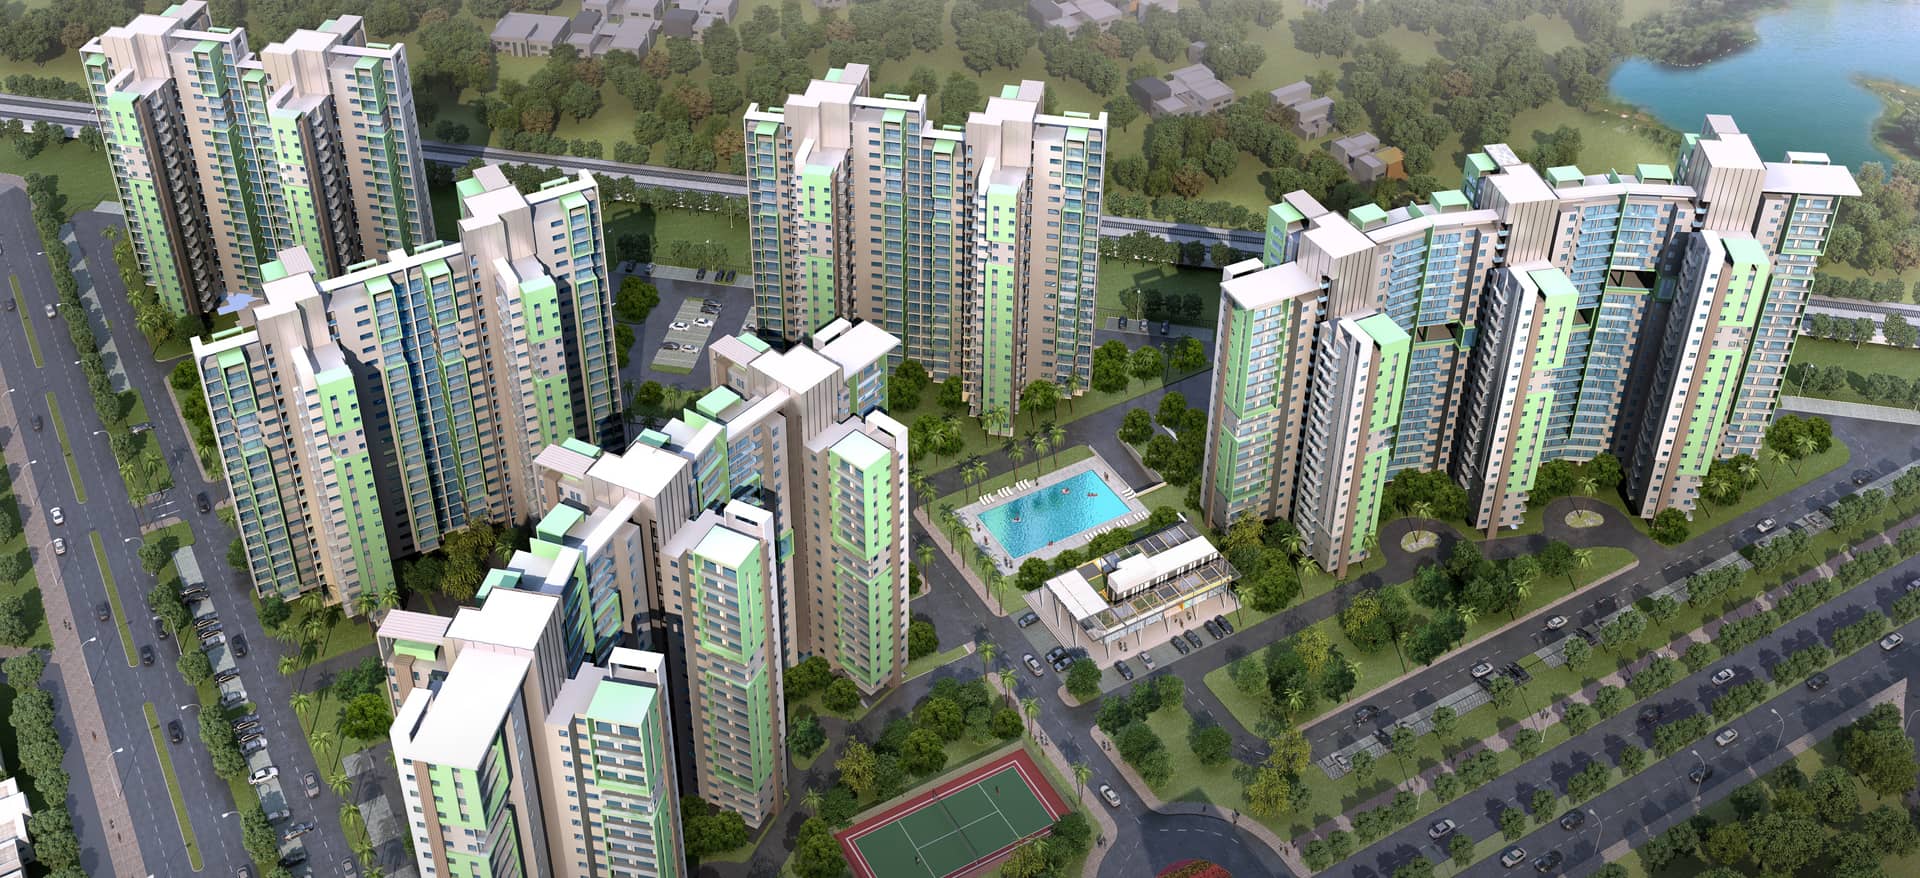 Sector M Group Housing Development, Uttar Pradesh, India